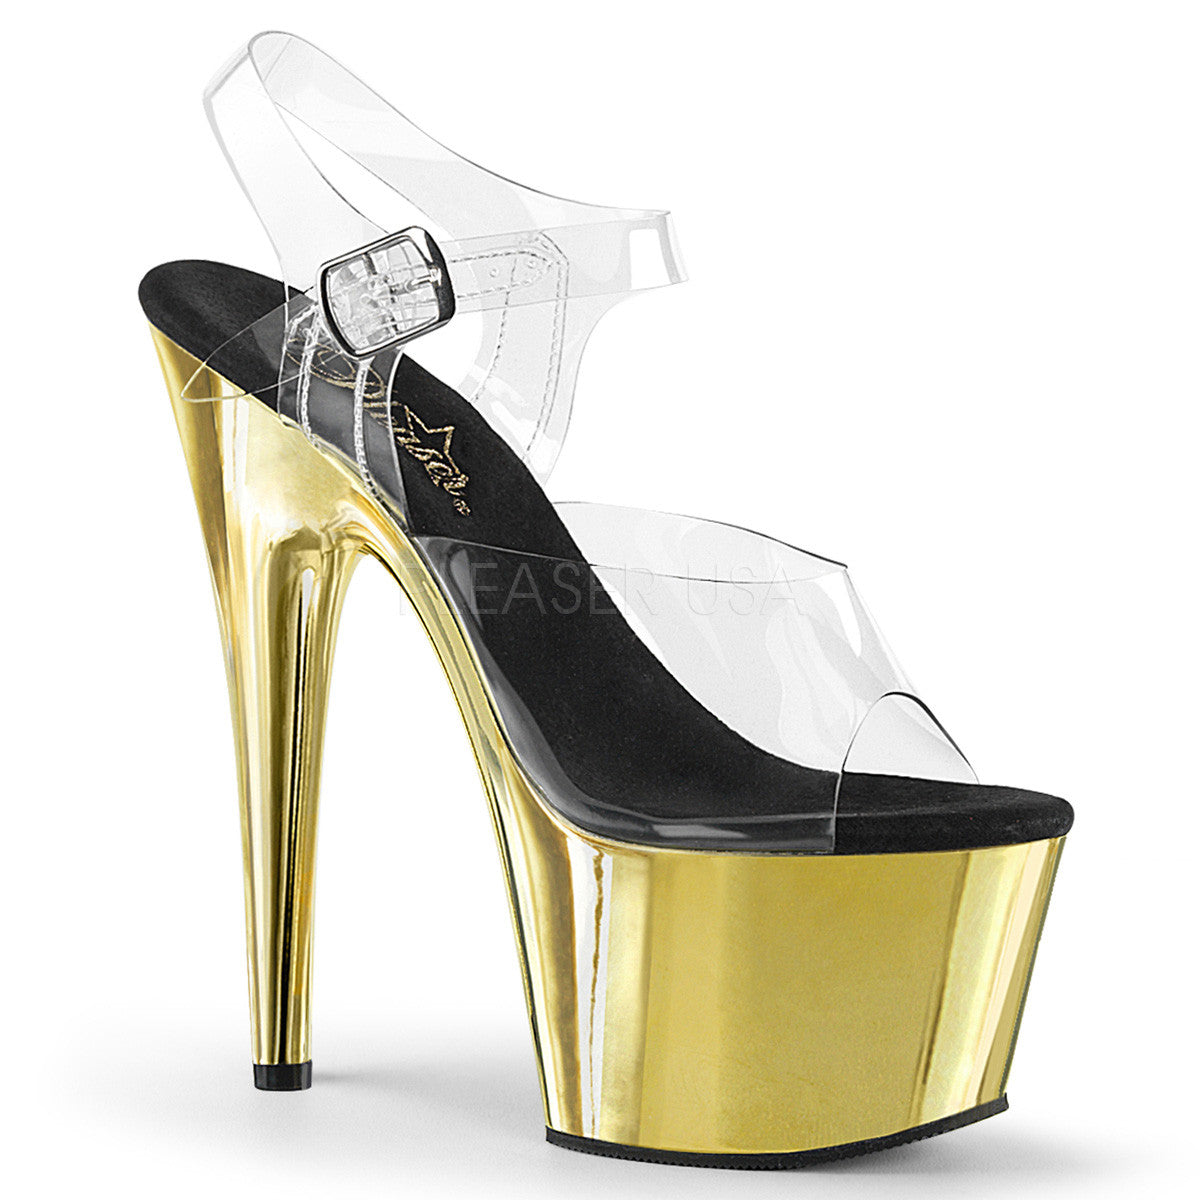 Pleaser ADORE-708 Gold Chrome Exotic Dancing Sandals - Shoecup.com - 1